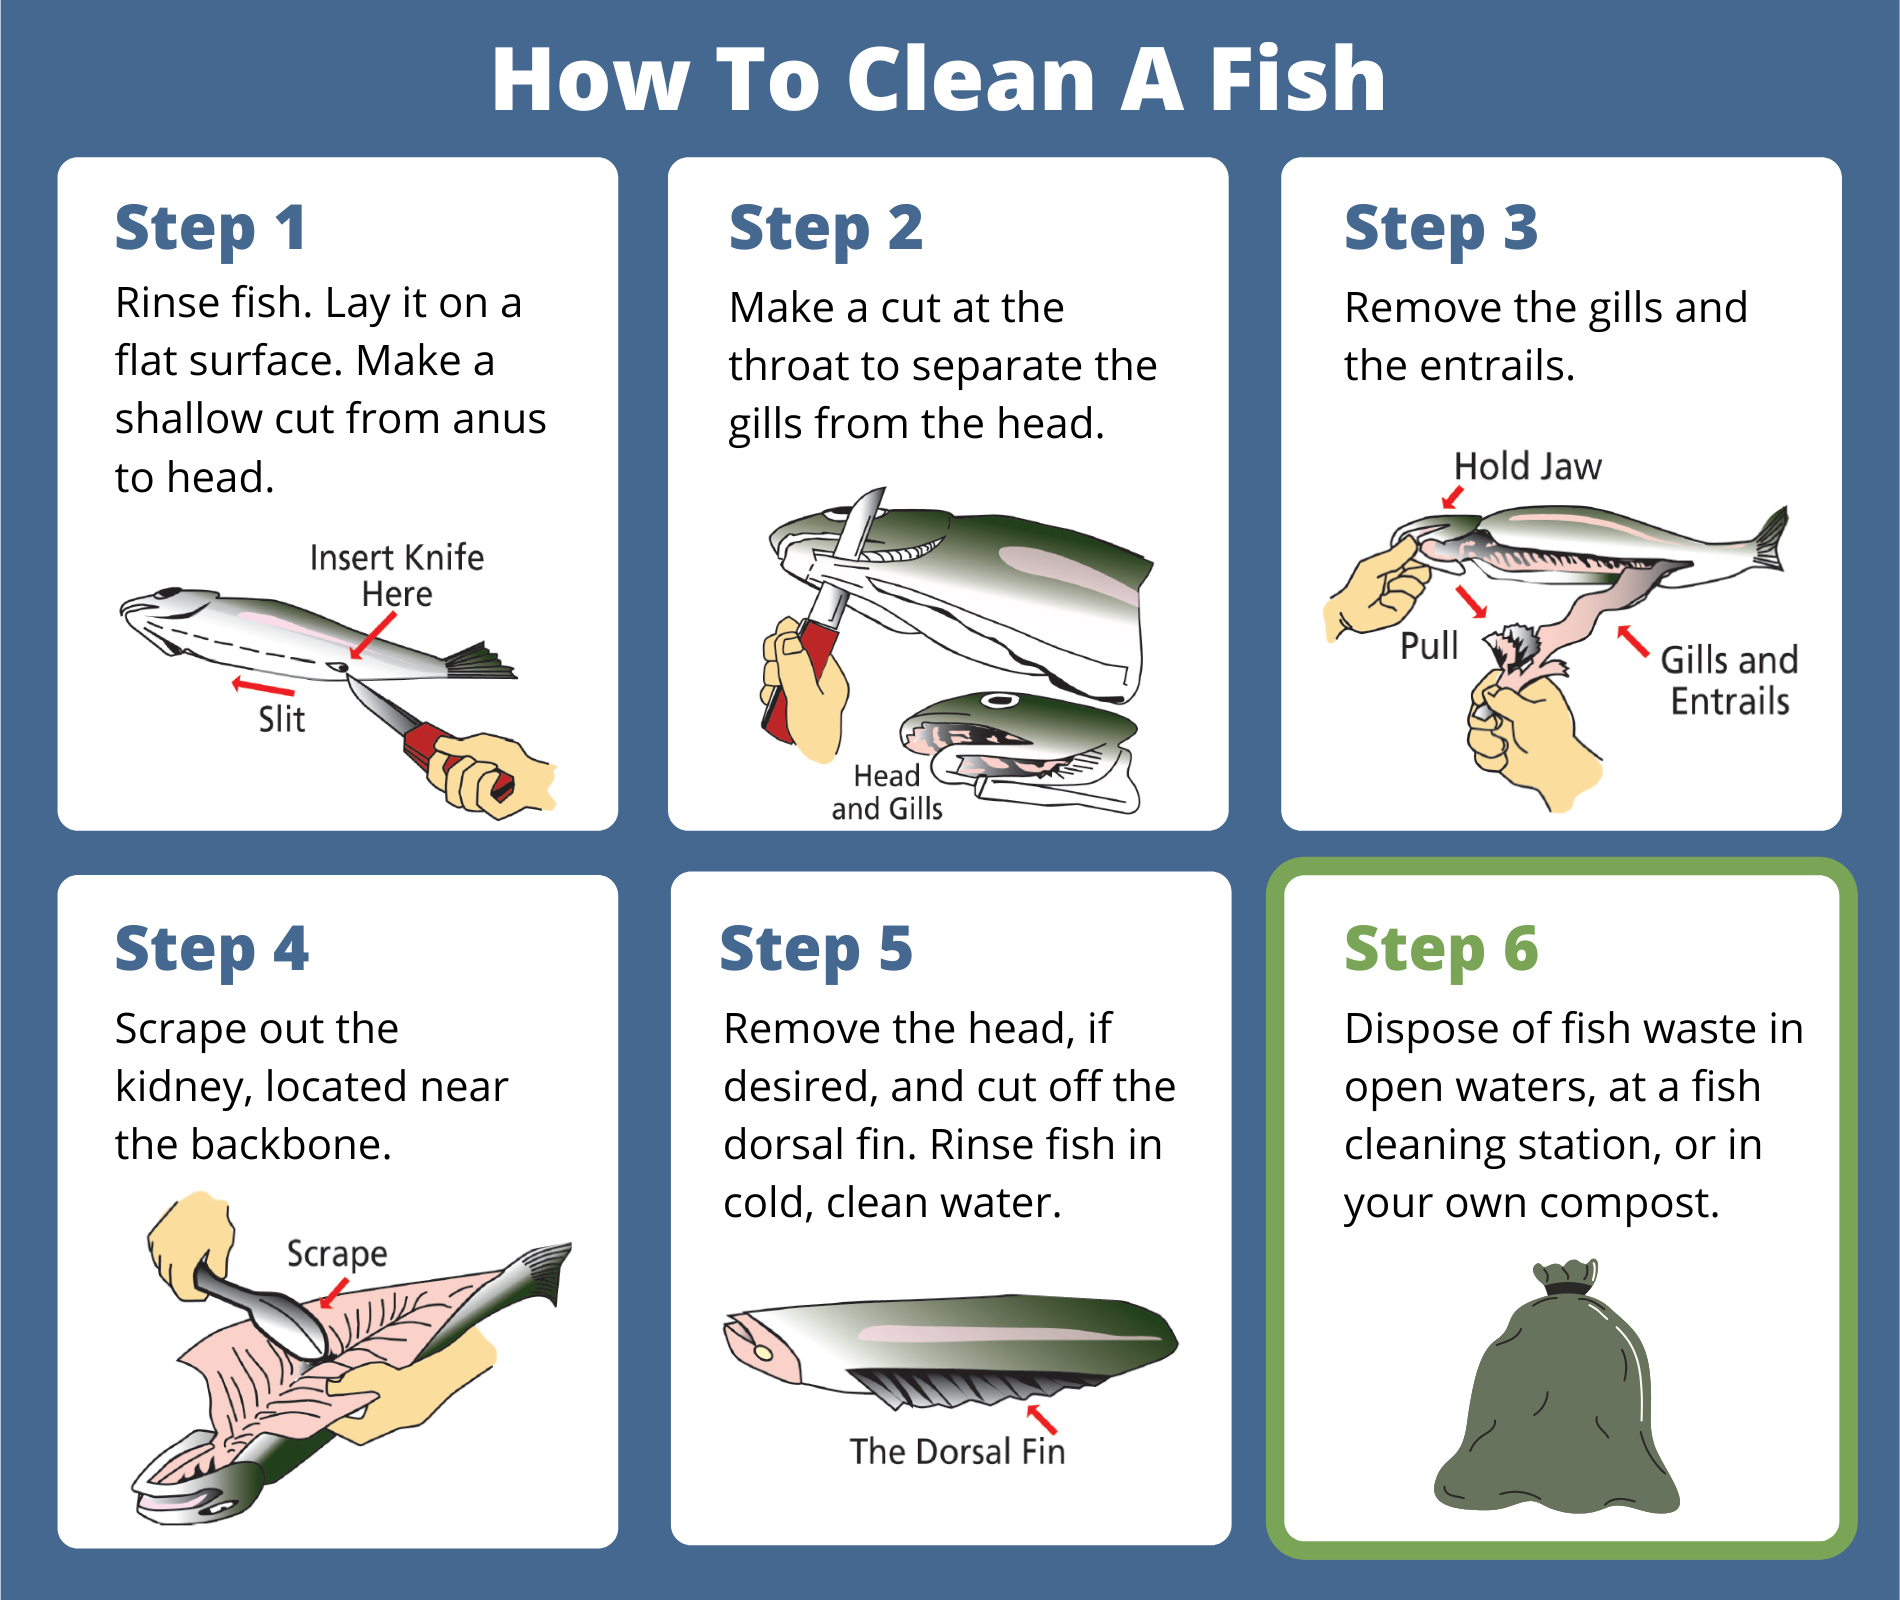 Proper fish waste disposal matters for marinas - Washington State  Department of Ecology